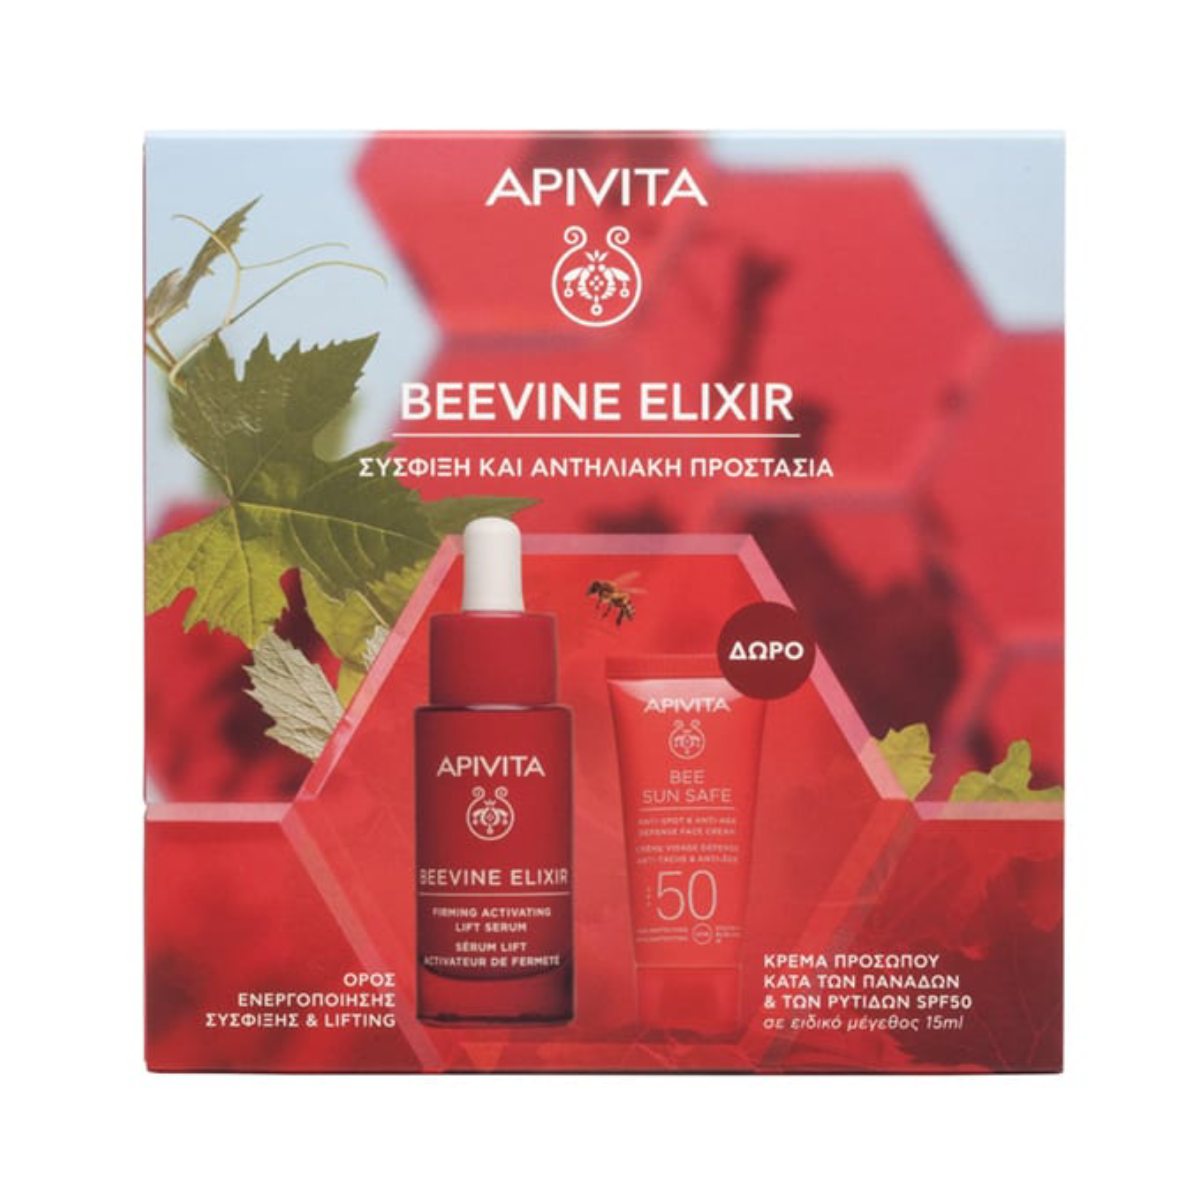 Apivita Beevine Elixir Promo Firming Activating Lift Serum Ορός Ενεργοποίησης Σύσφιξης & Lifting, 30ml & Δώρο Bee Sun Safe Κρέμα Προσώπου Κατά των Πανάδων & των Ρυτίδων SPF50, 15ml, 1σετ